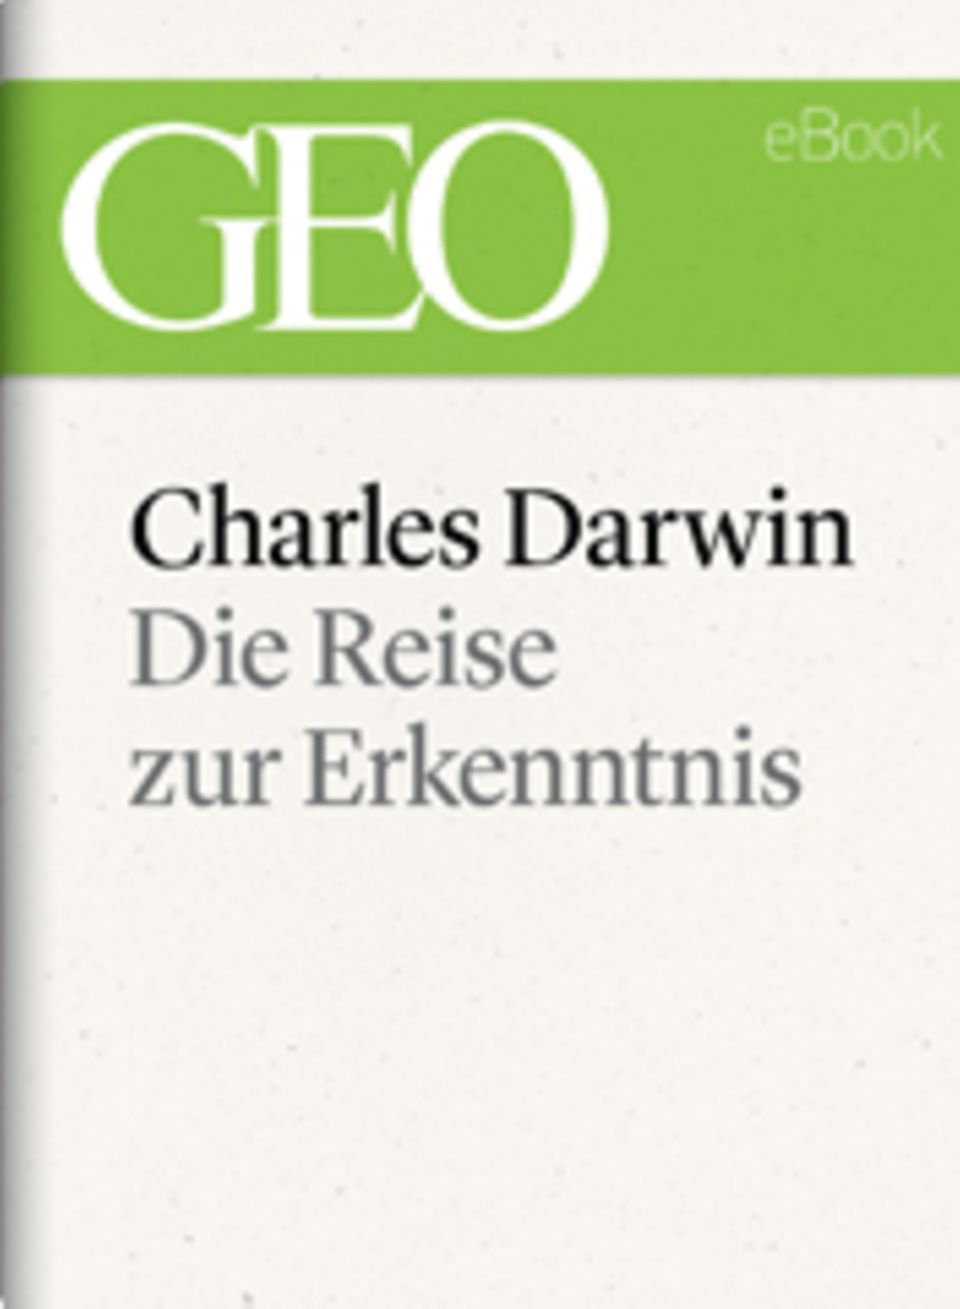 Technologie: GEO eBook "Charles Darwin"